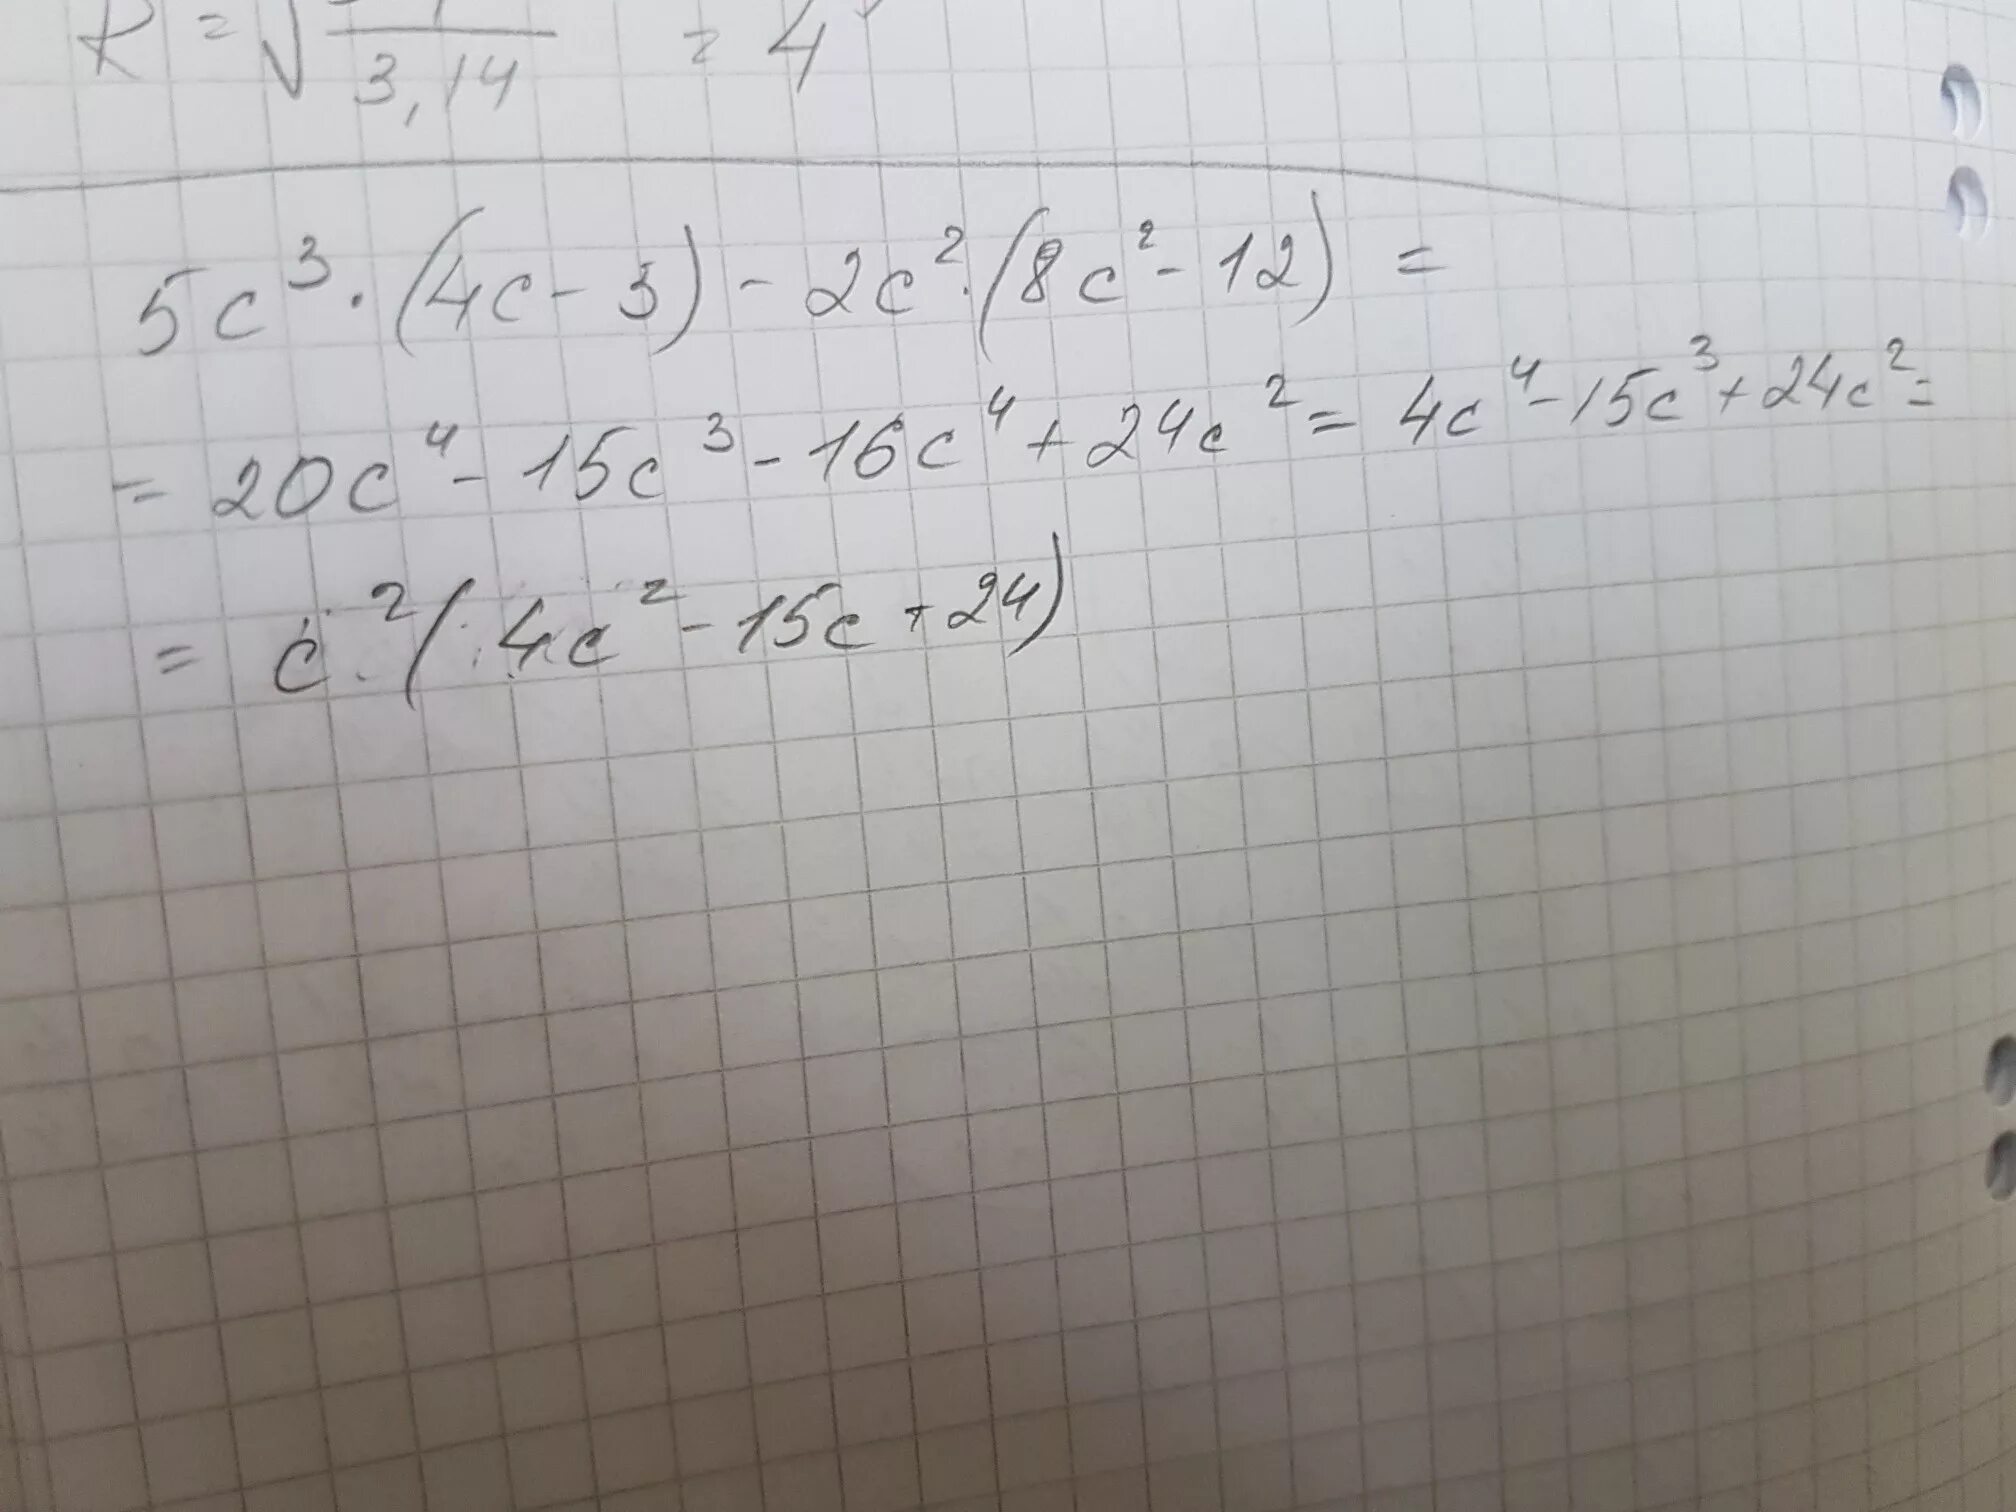 3 5с 3 4. Упростите выражение (2с-6) (8с+5)-(5с+2)(5с-2). (2a+3)(2a-3). 2.5 3.5. 2/4-3/4.